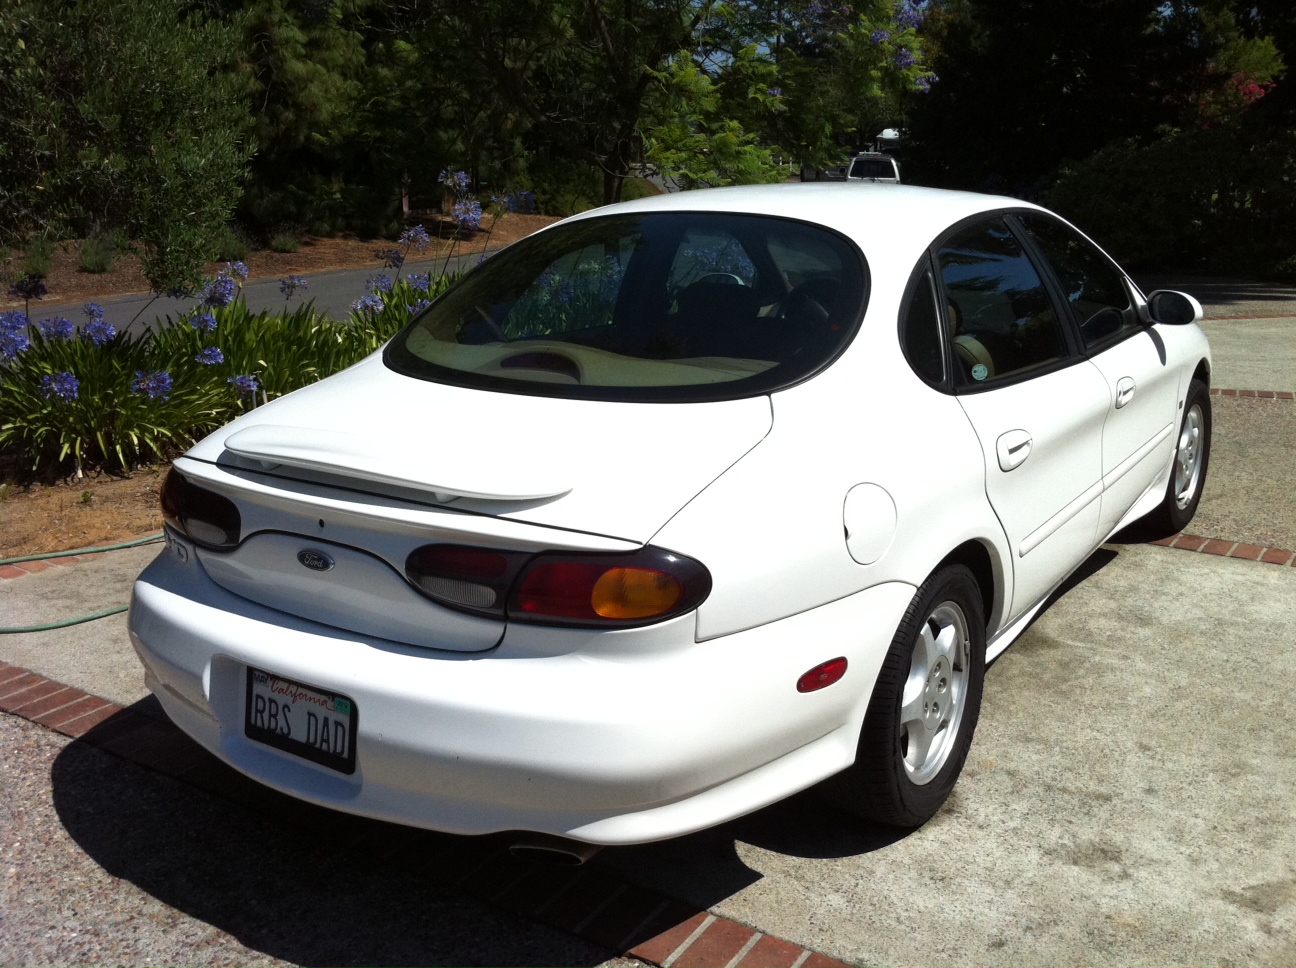 1997 Ford taurus sho sedan reviews #5